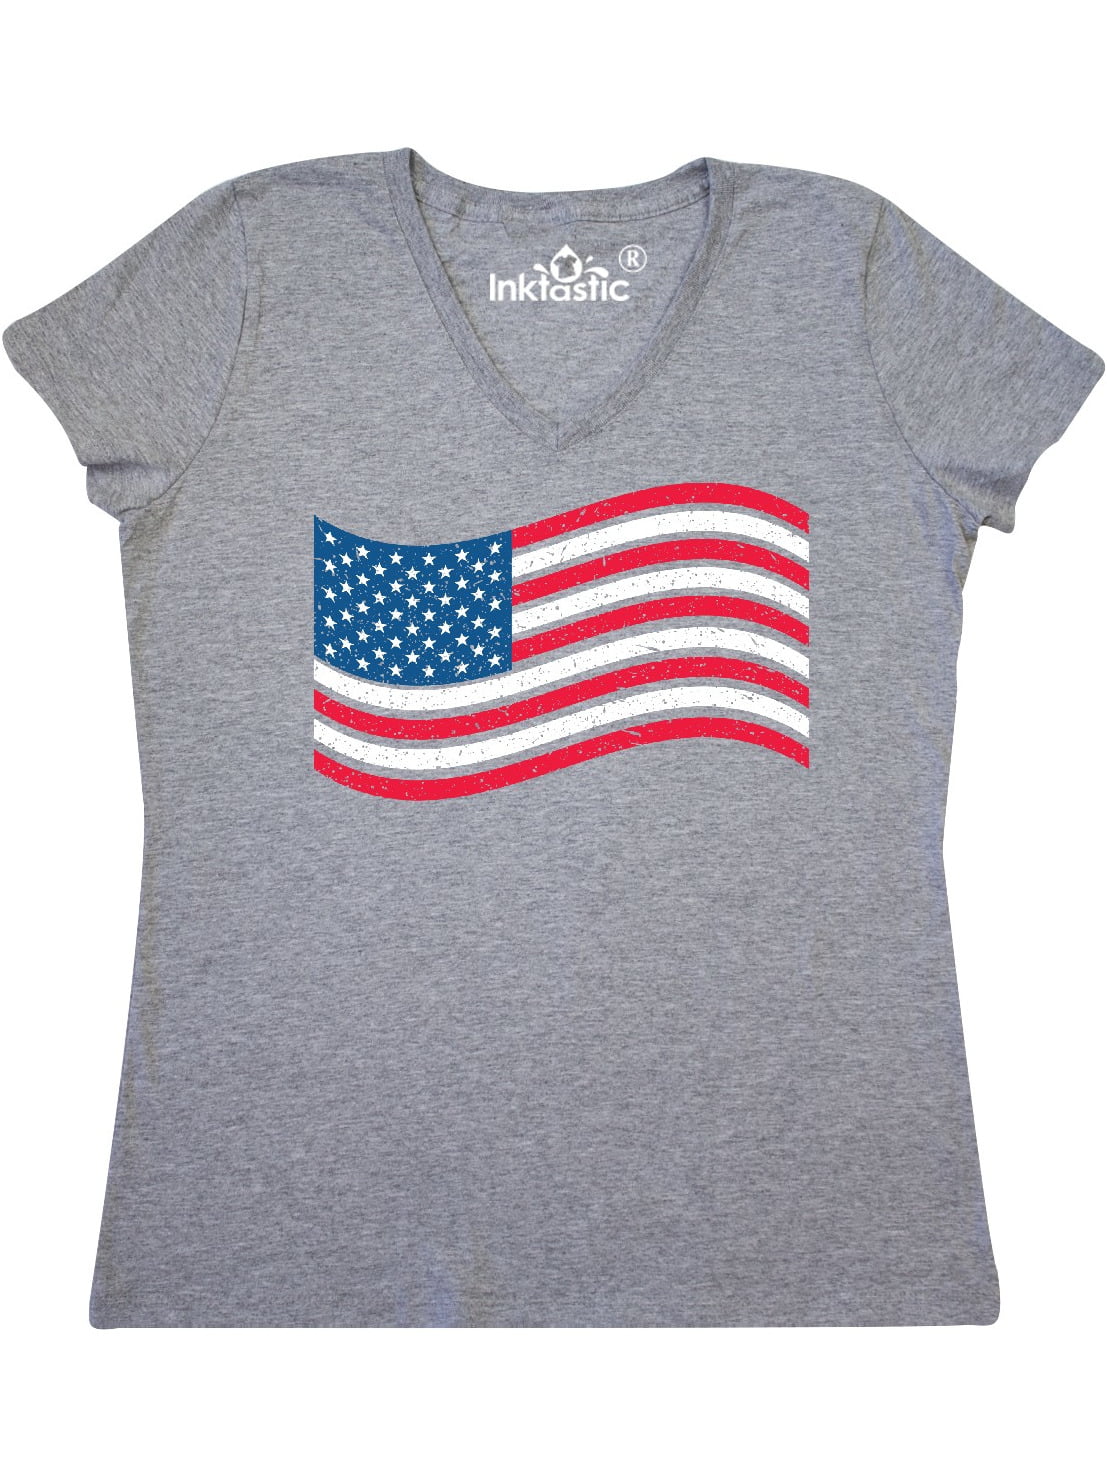 INKtastic - Grunge American Flag Women's V-Neck T-Shirt - Walmart.com ...